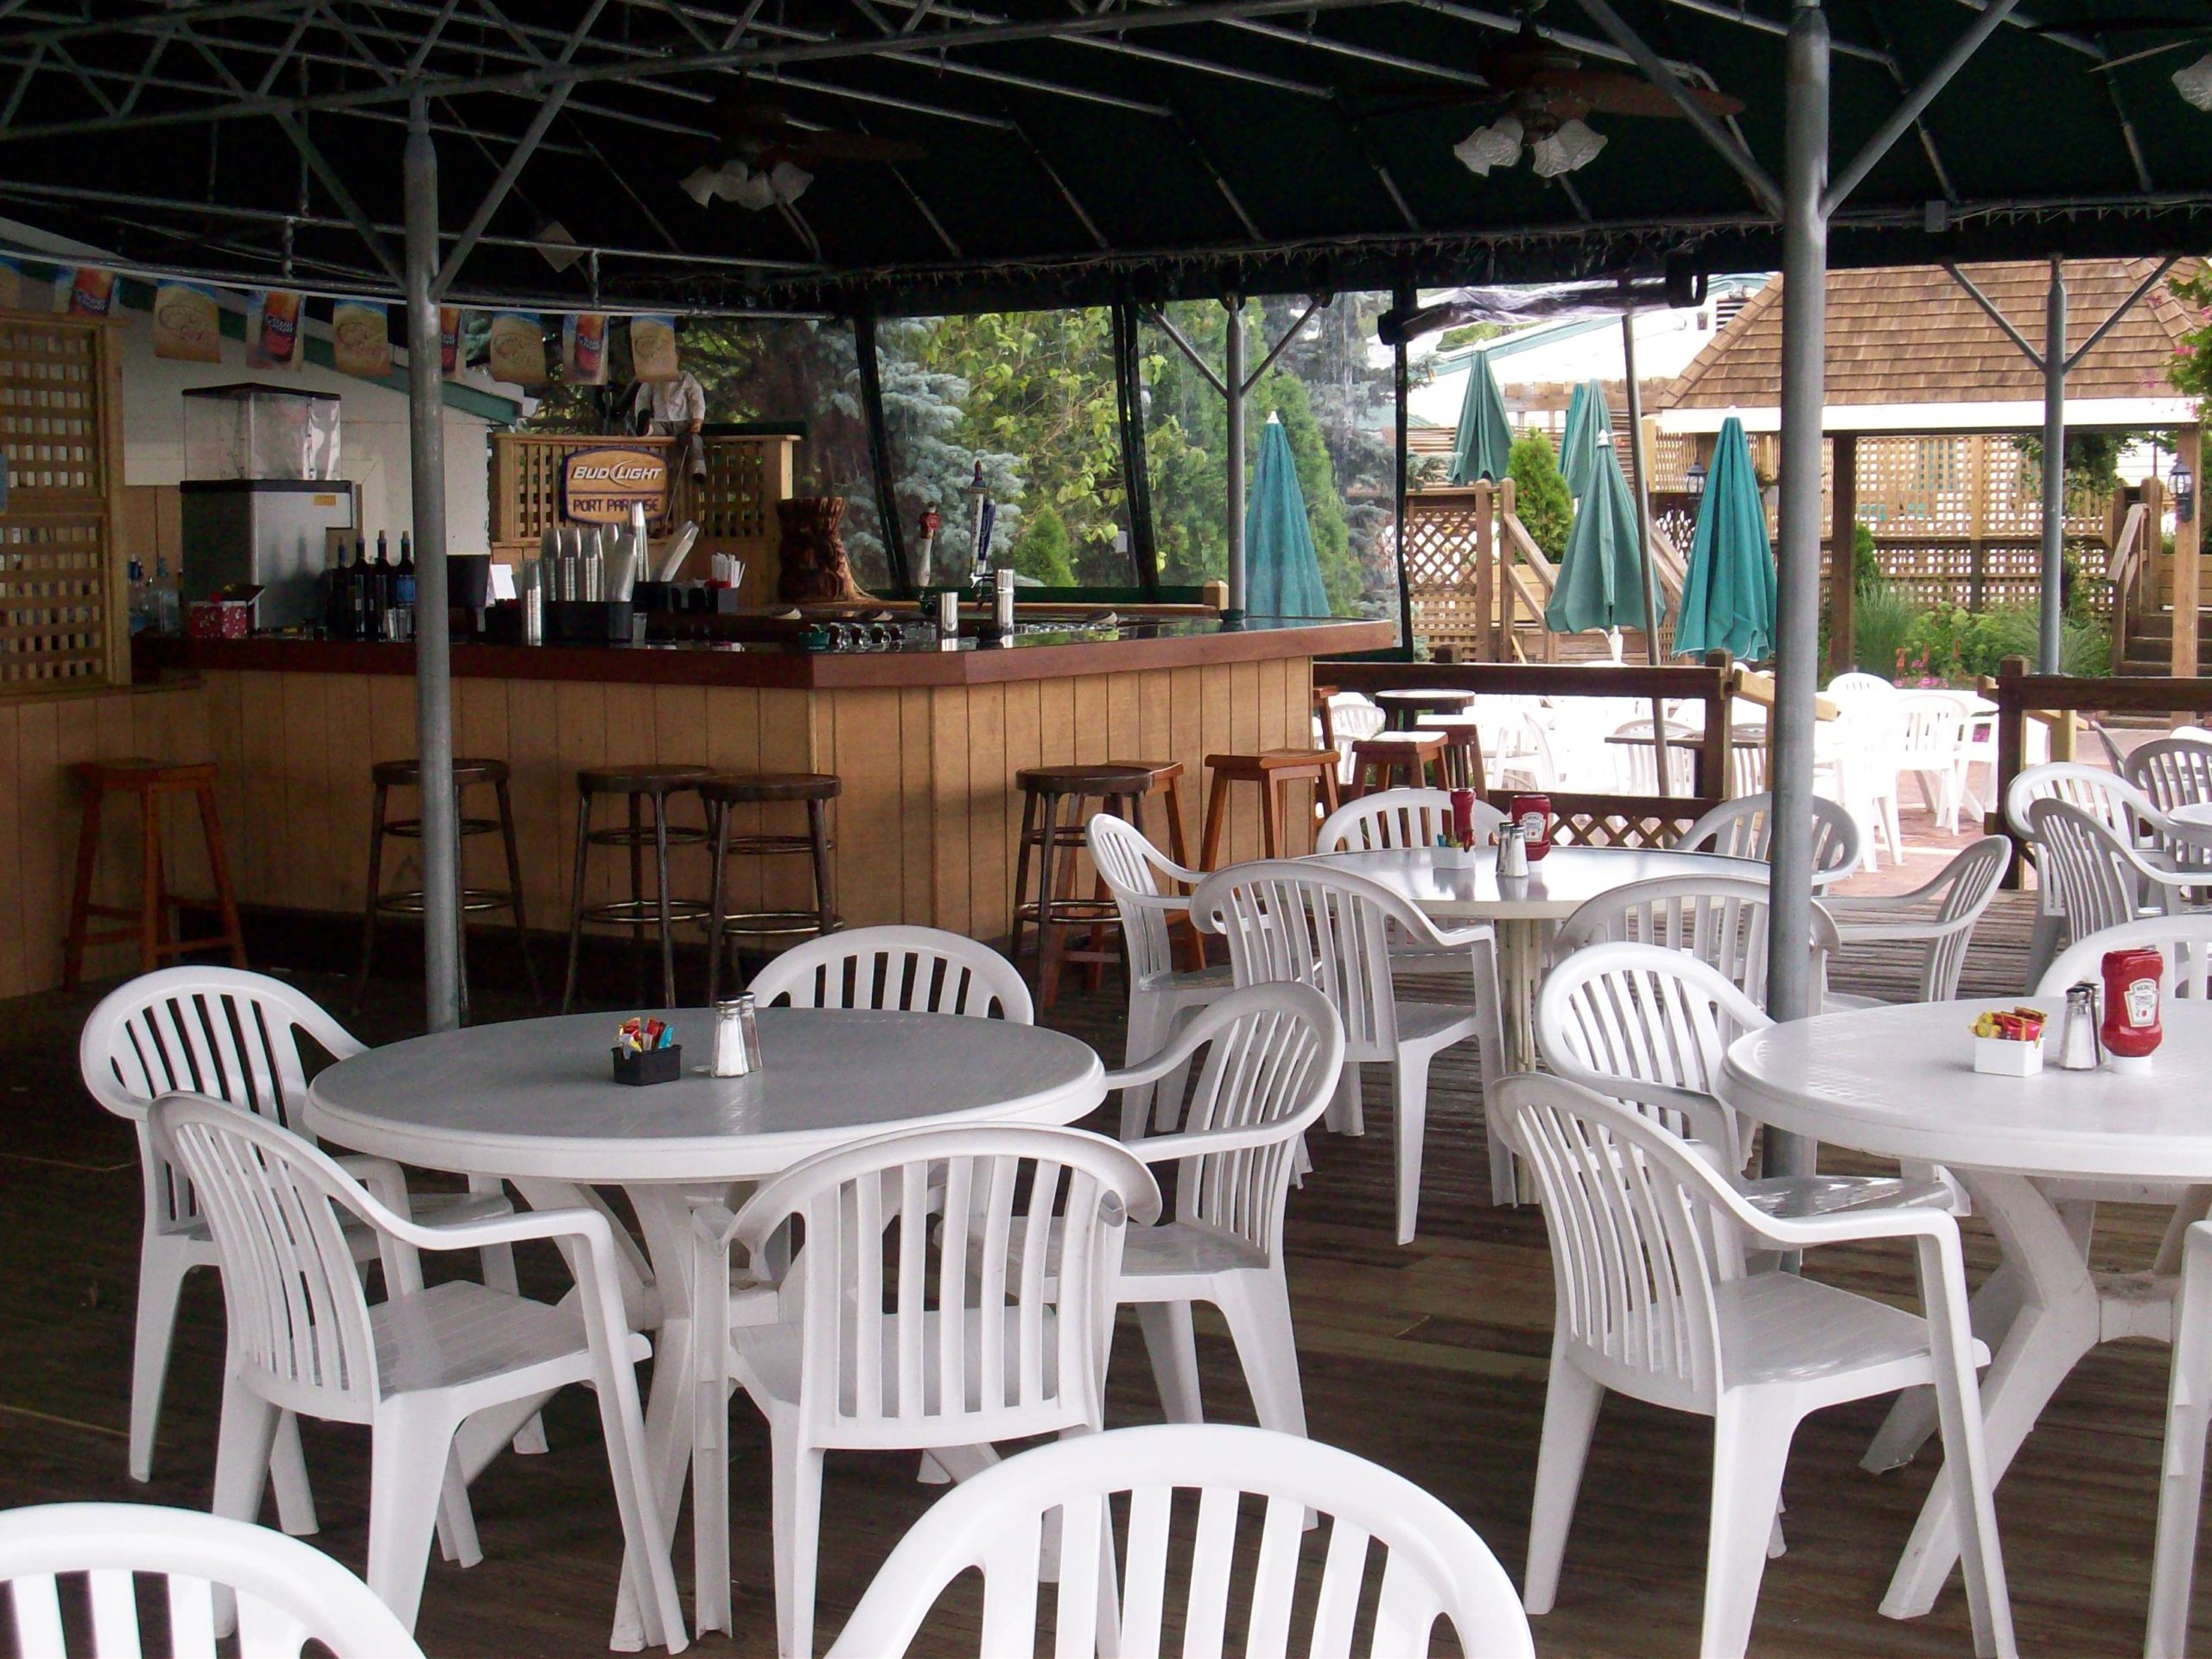 The Tiki Bar and Restaurant